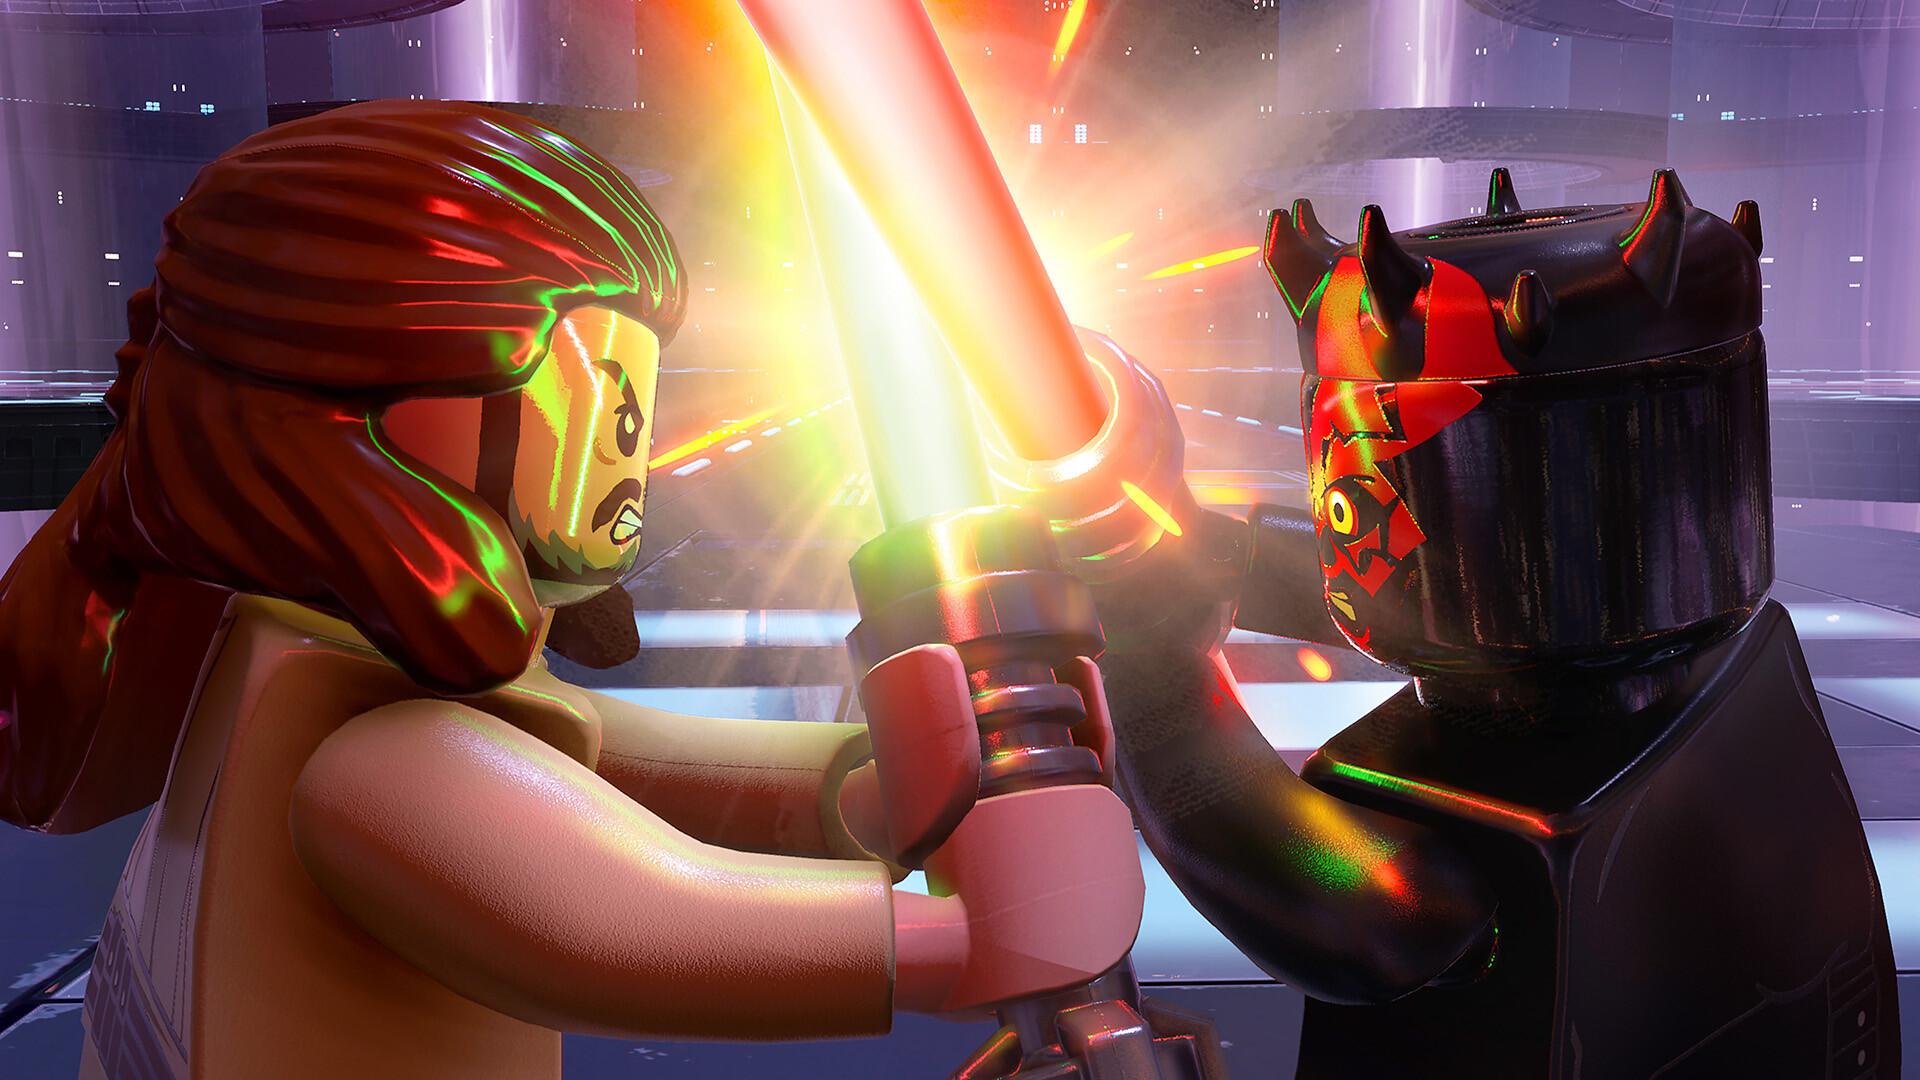 Oficiálny obrázok z hry Lego Star Wars: The Skywalker Saga.